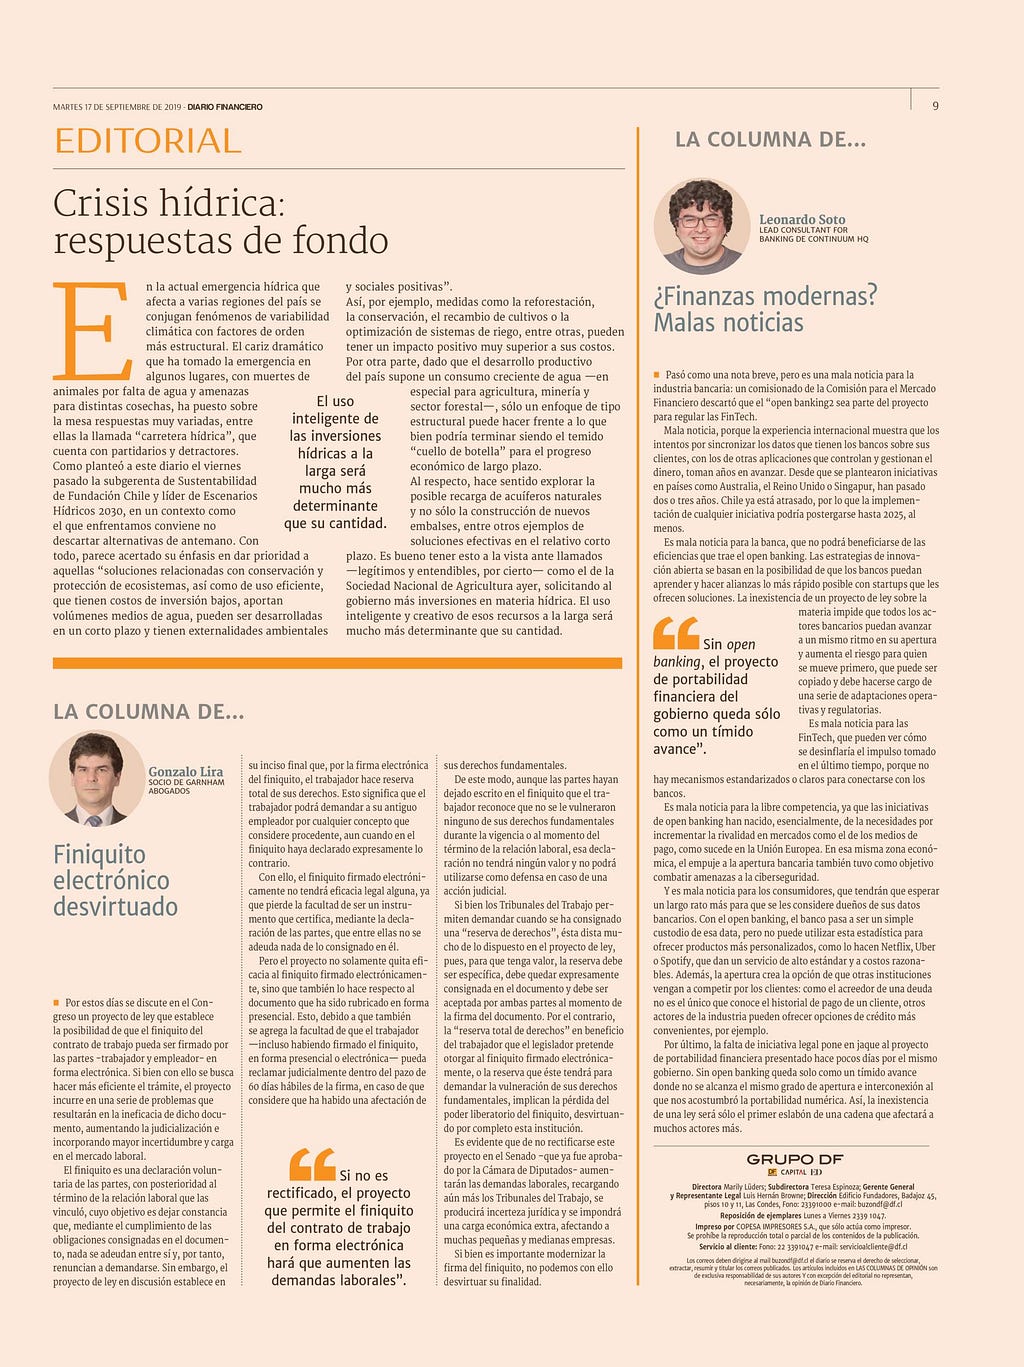 Columna ¿Finanzas modernas? Malas noticias, por Leonardo Soto, lead consultant for Banking en Continuum.